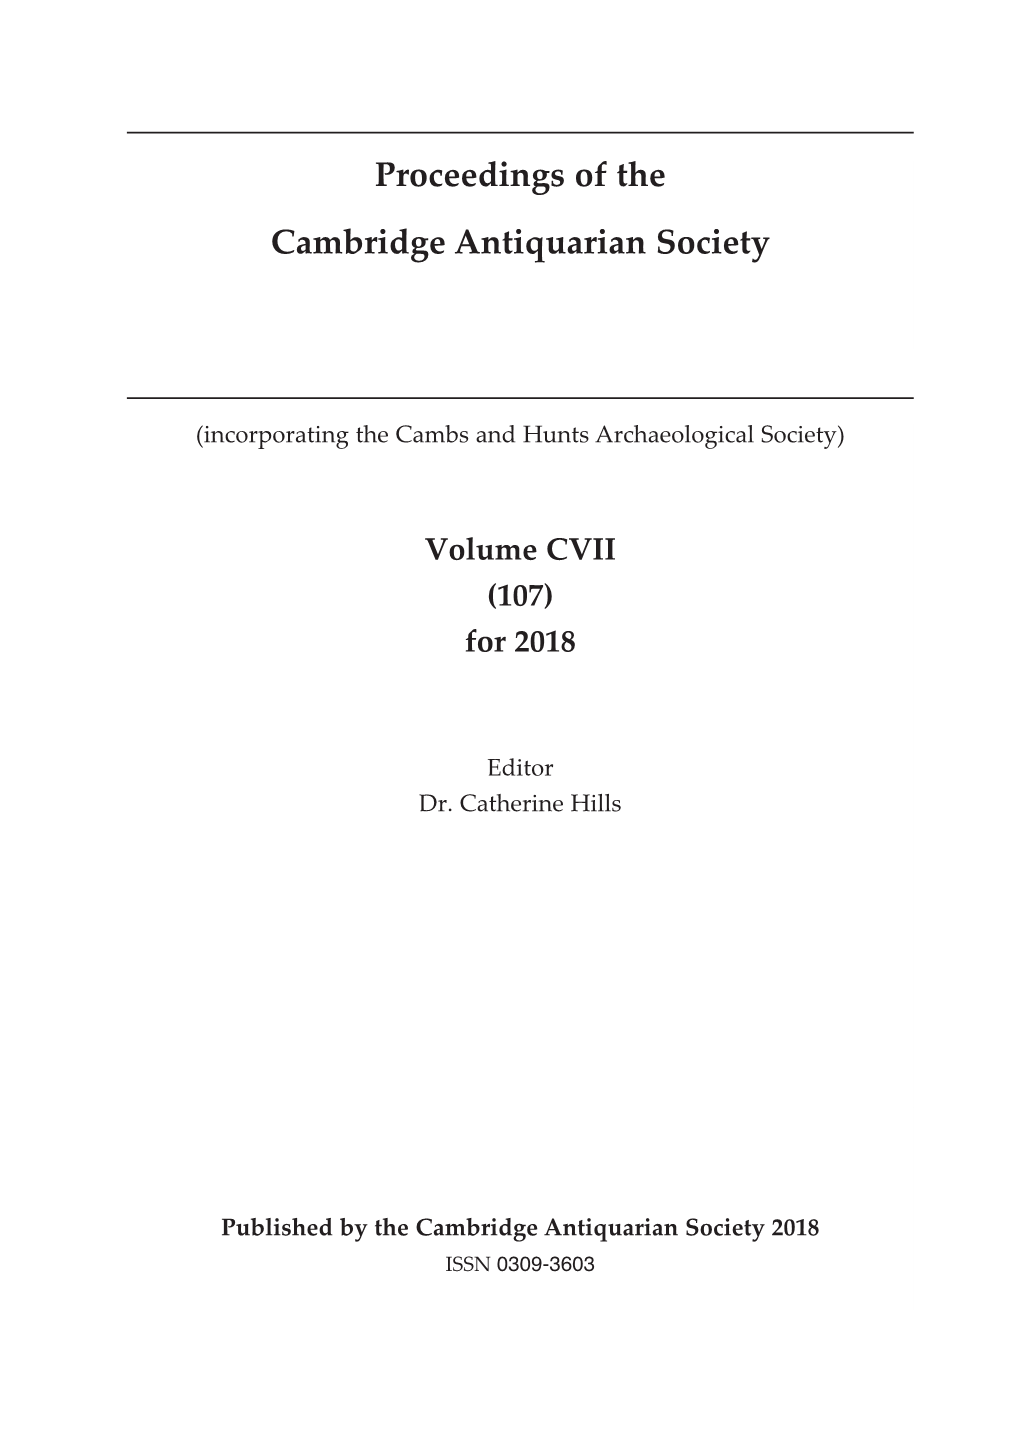 Proceedings of the Cambridge Antiquarian Society Volume CVII (107) for 2018: Article Summaries 1